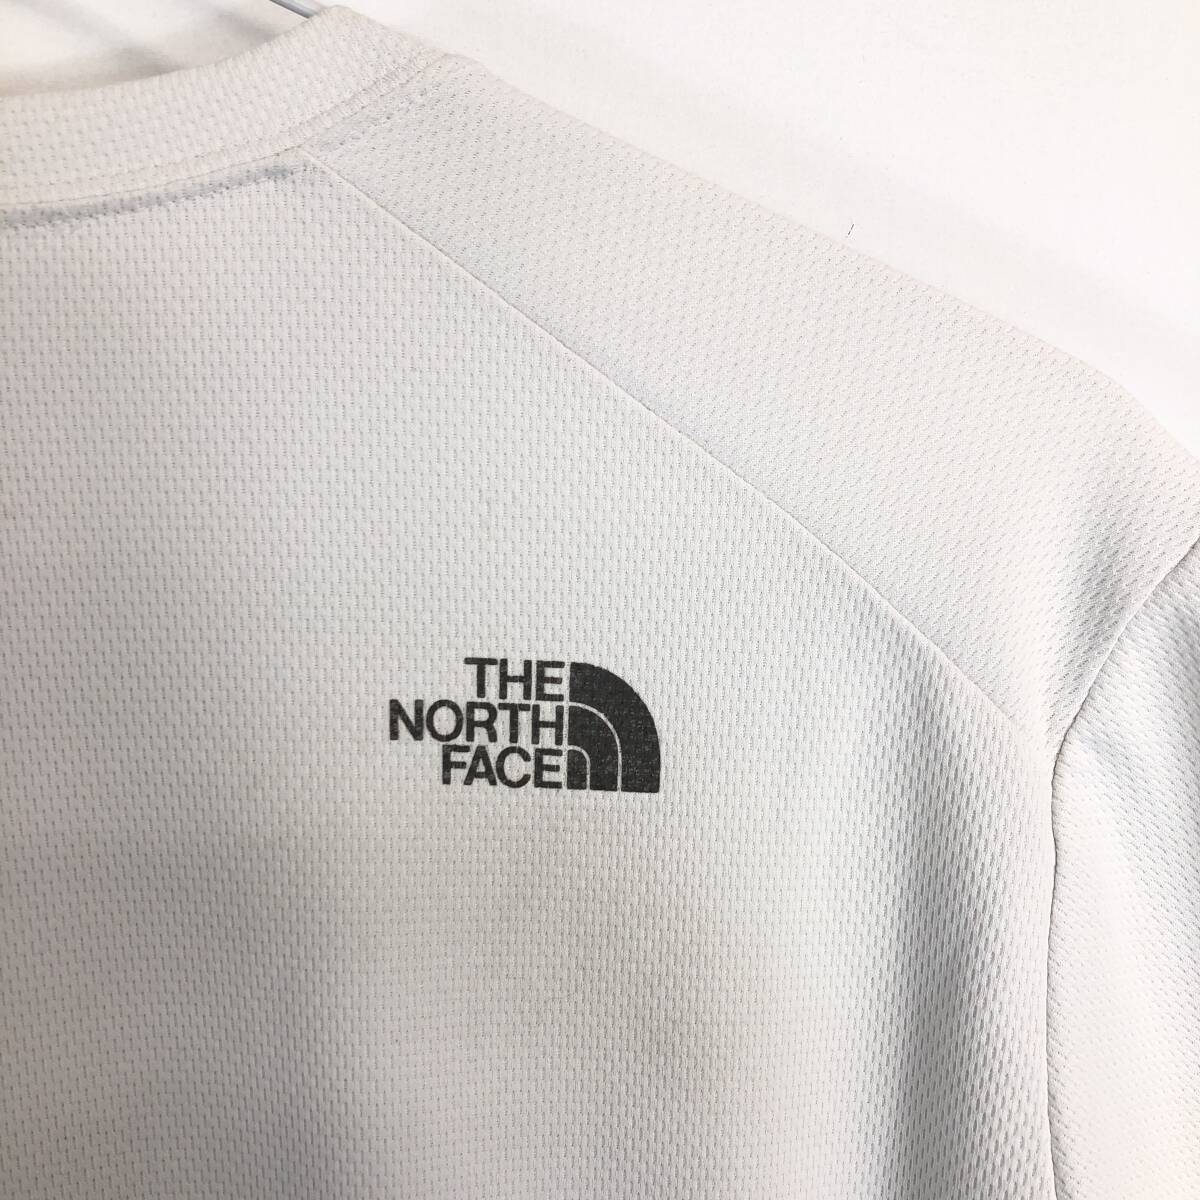 THE NORTH FACE(ノースフェイス) S/S SOCOOL PRINT CREW 半袖速乾Tシャツ ホワイト Men's Mサイズ NT11284